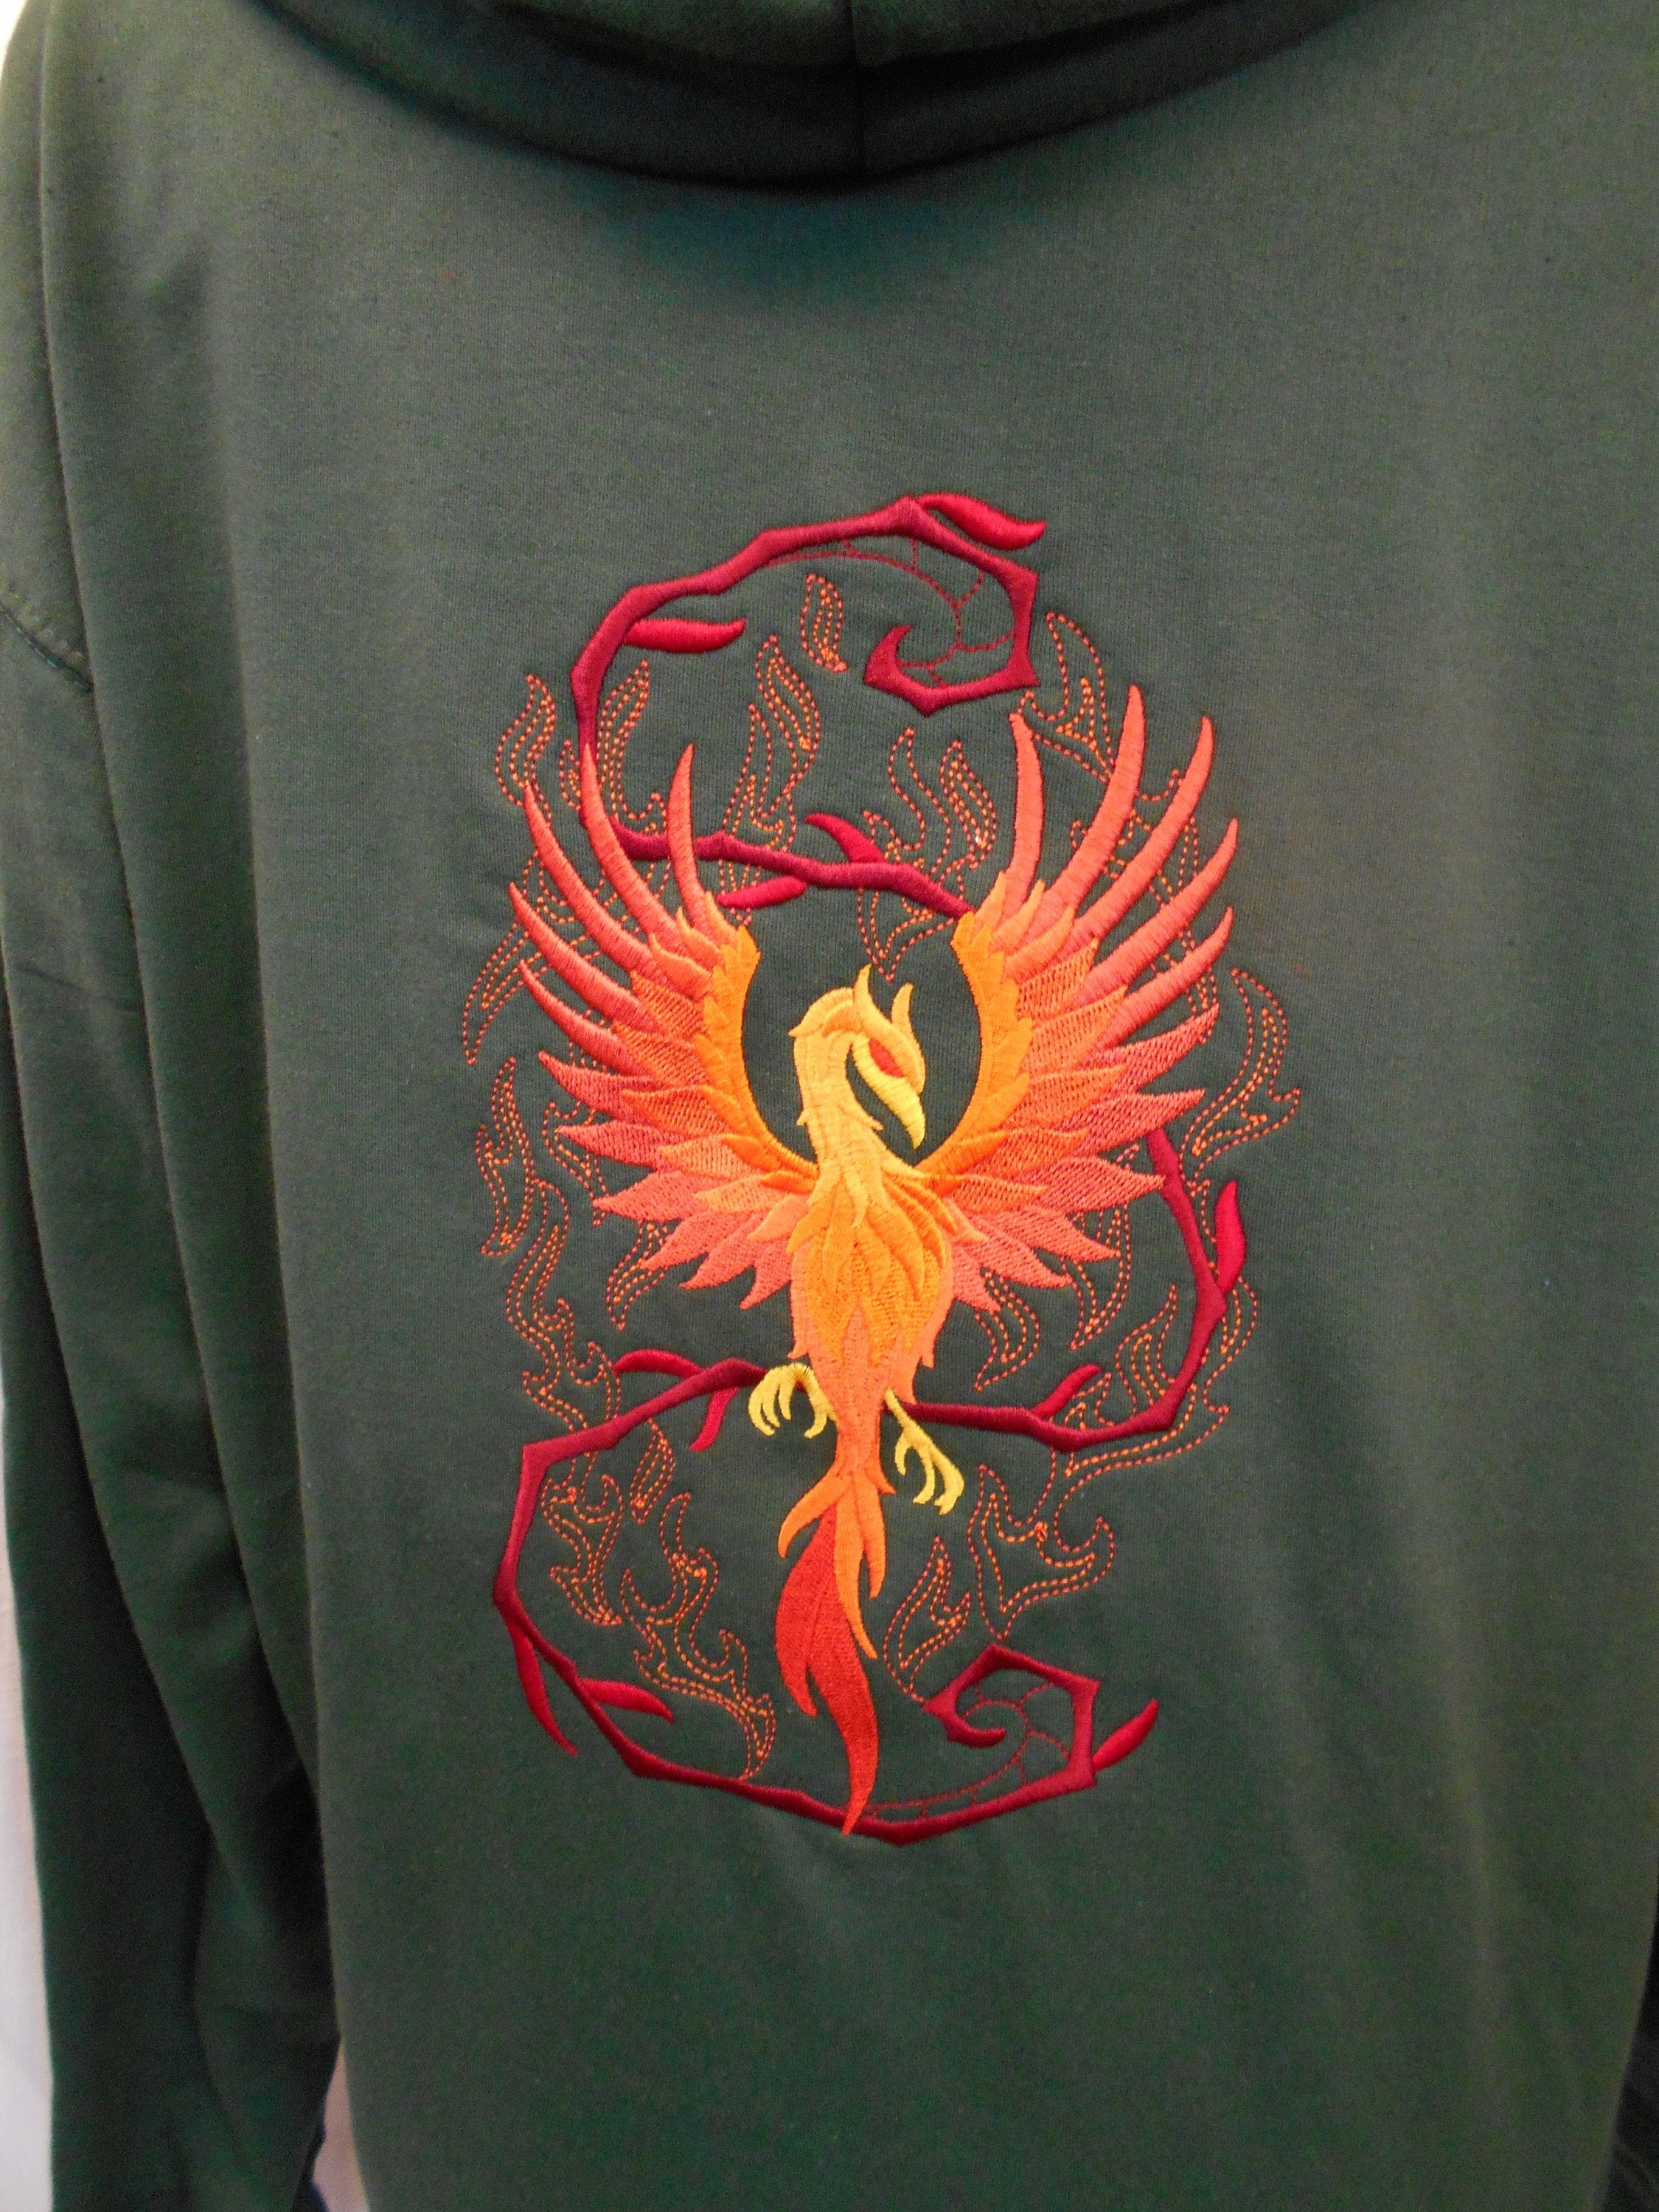 Phoenix with the violet flame T-Shirt sweat shirts custom t shirt